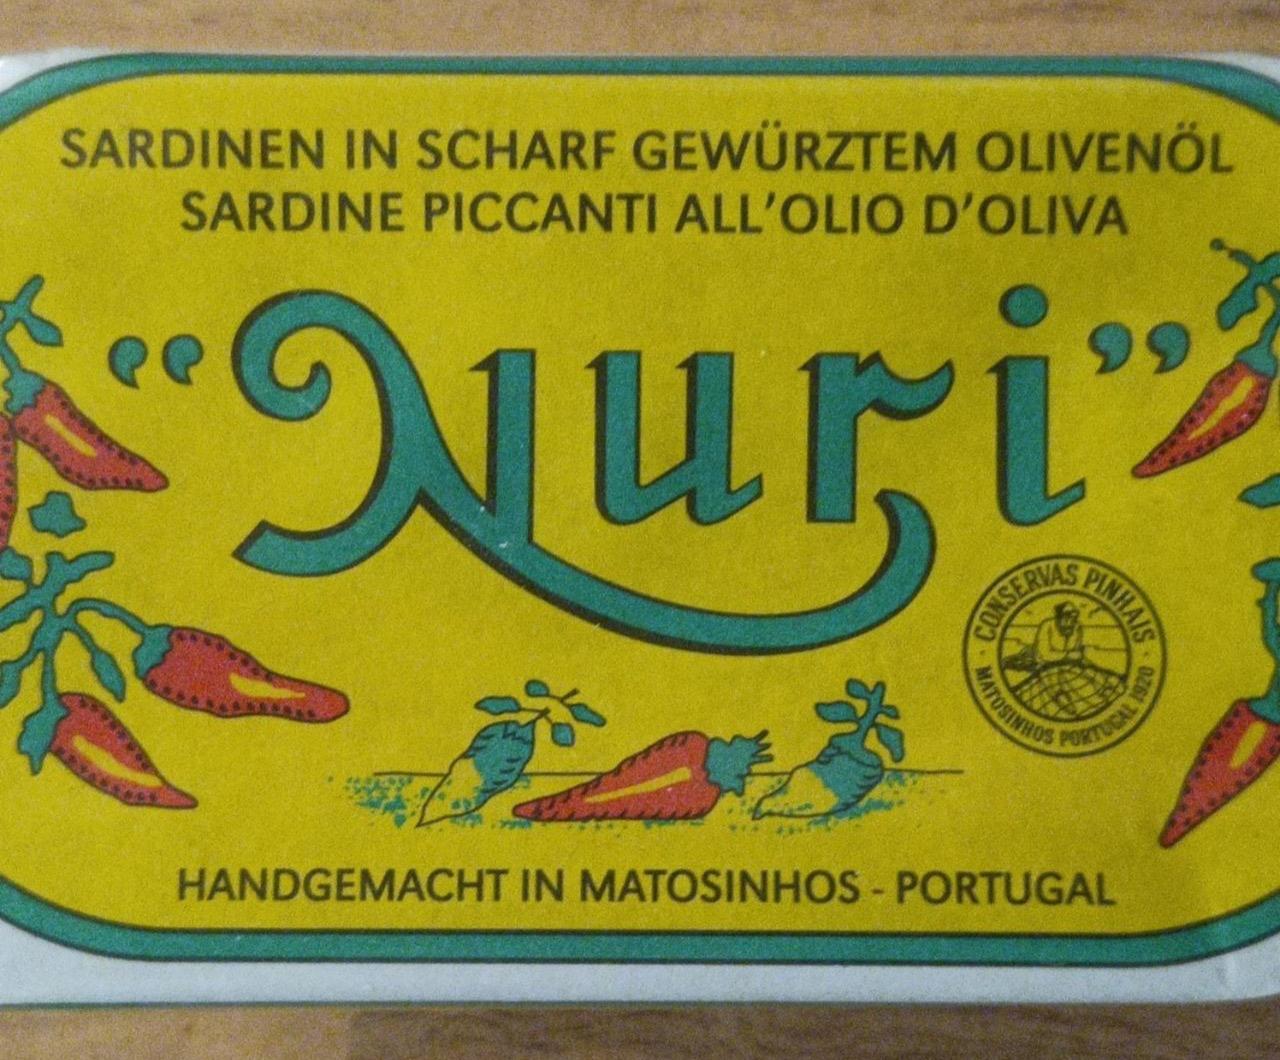 Képek - Sardinien in scharf gewürztem olivenöl Nuri